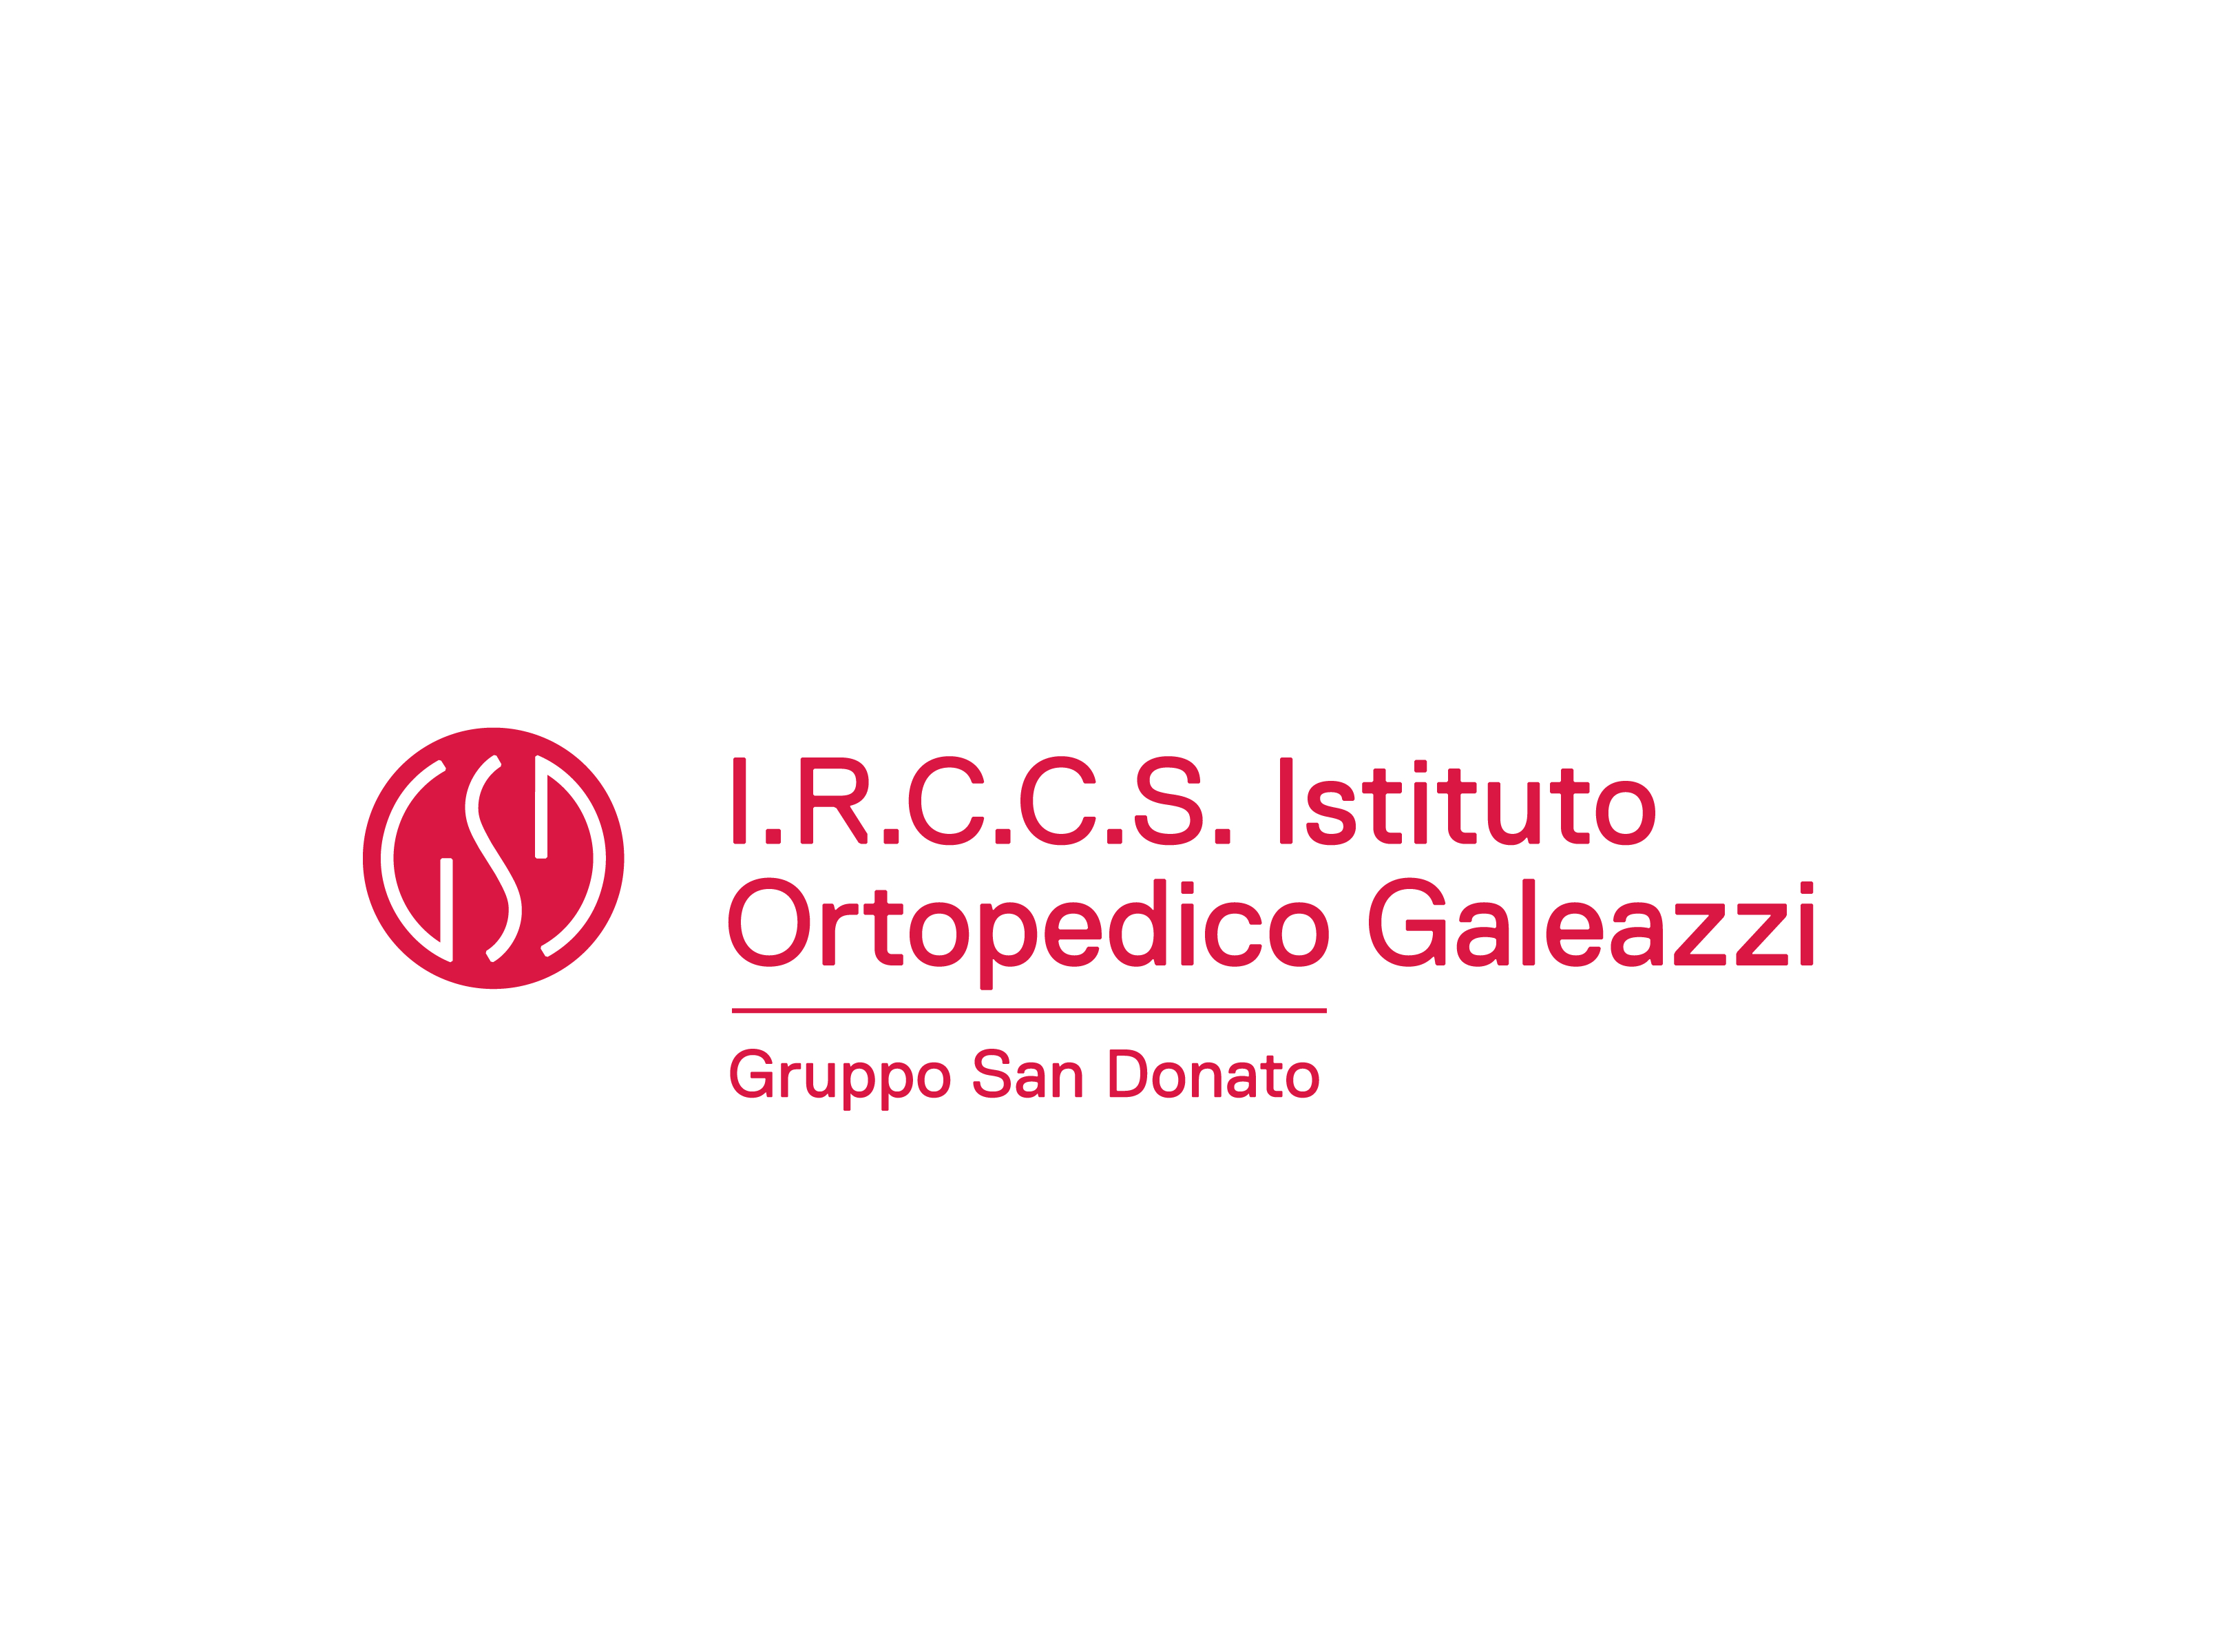 Logo of IRCCS Istituto Ortopedico Galeazzi